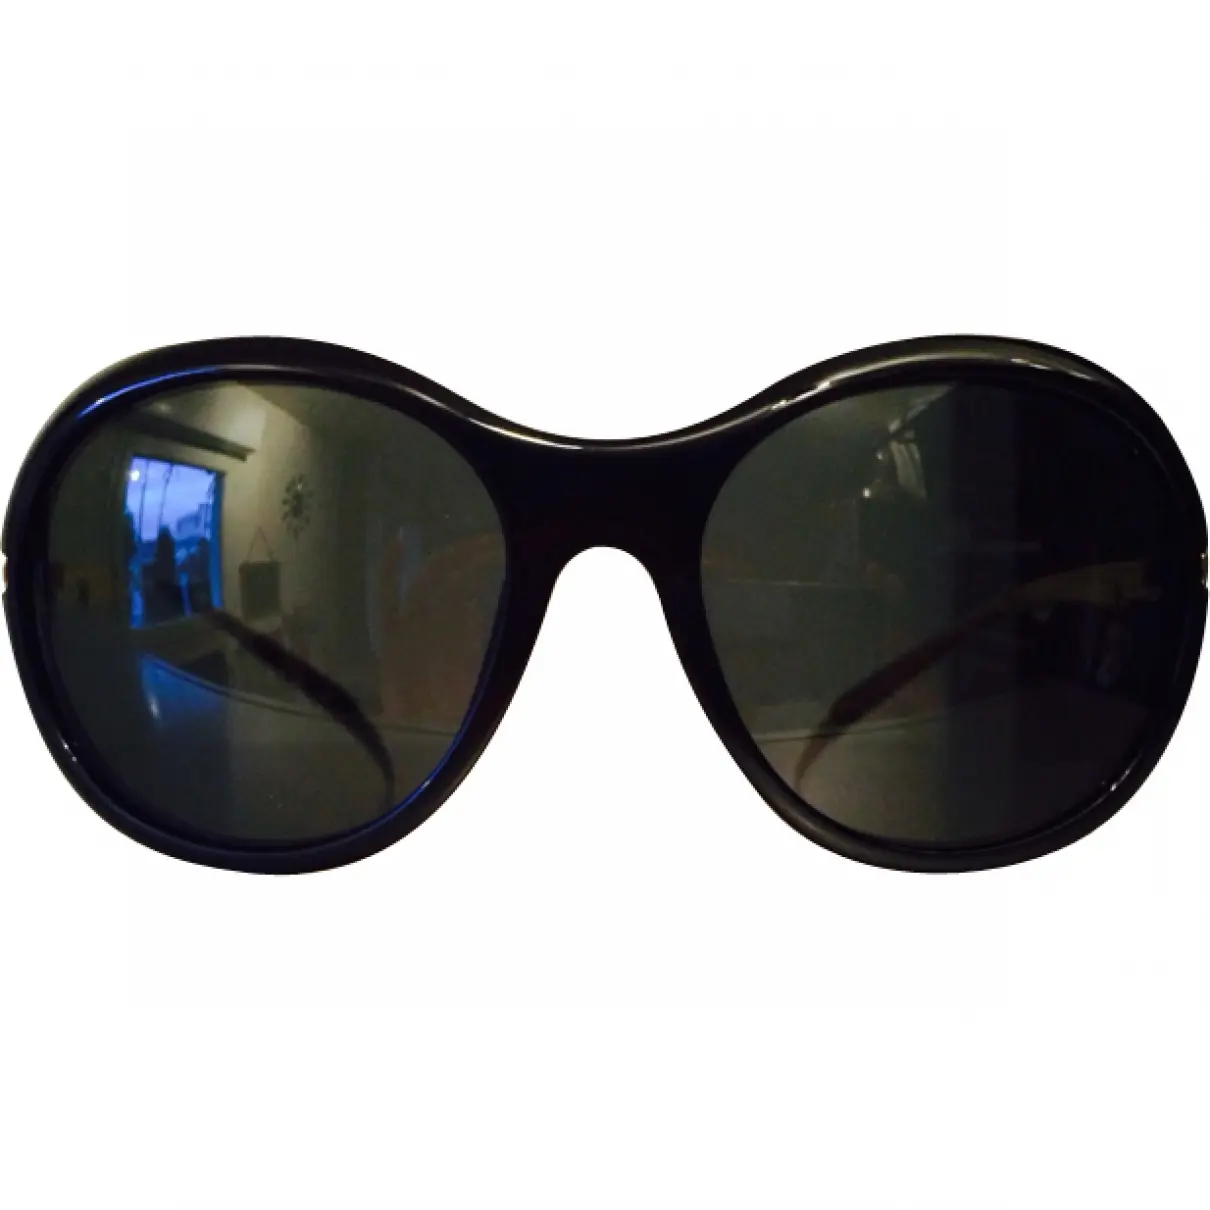 Black Sunglasses Chanel